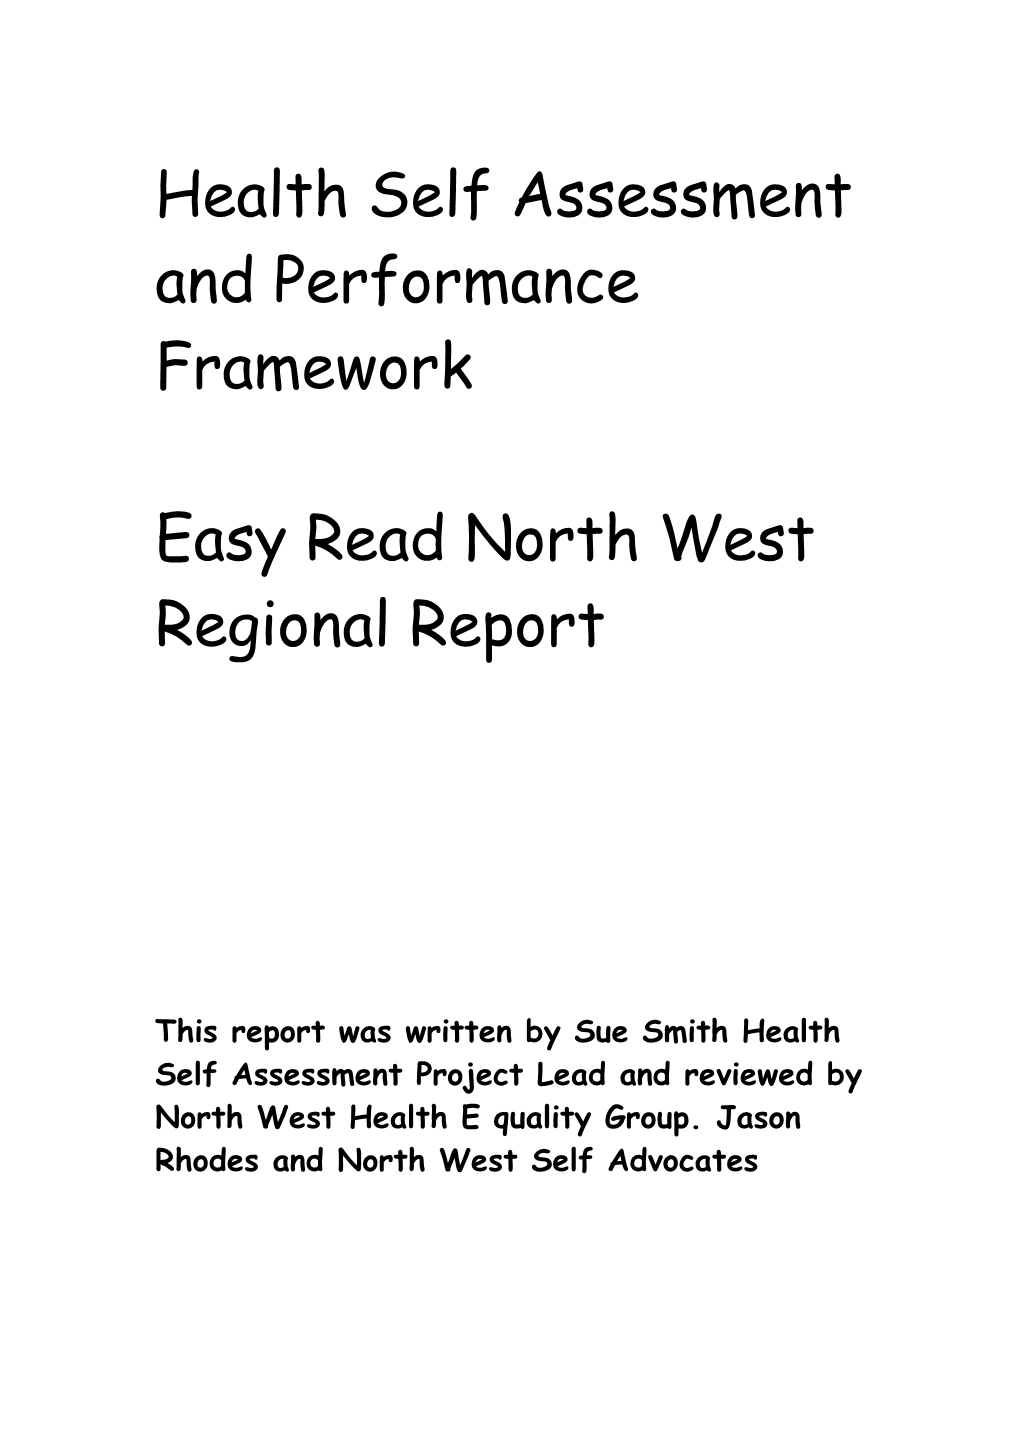 Health Self Assessment and Performance Framework